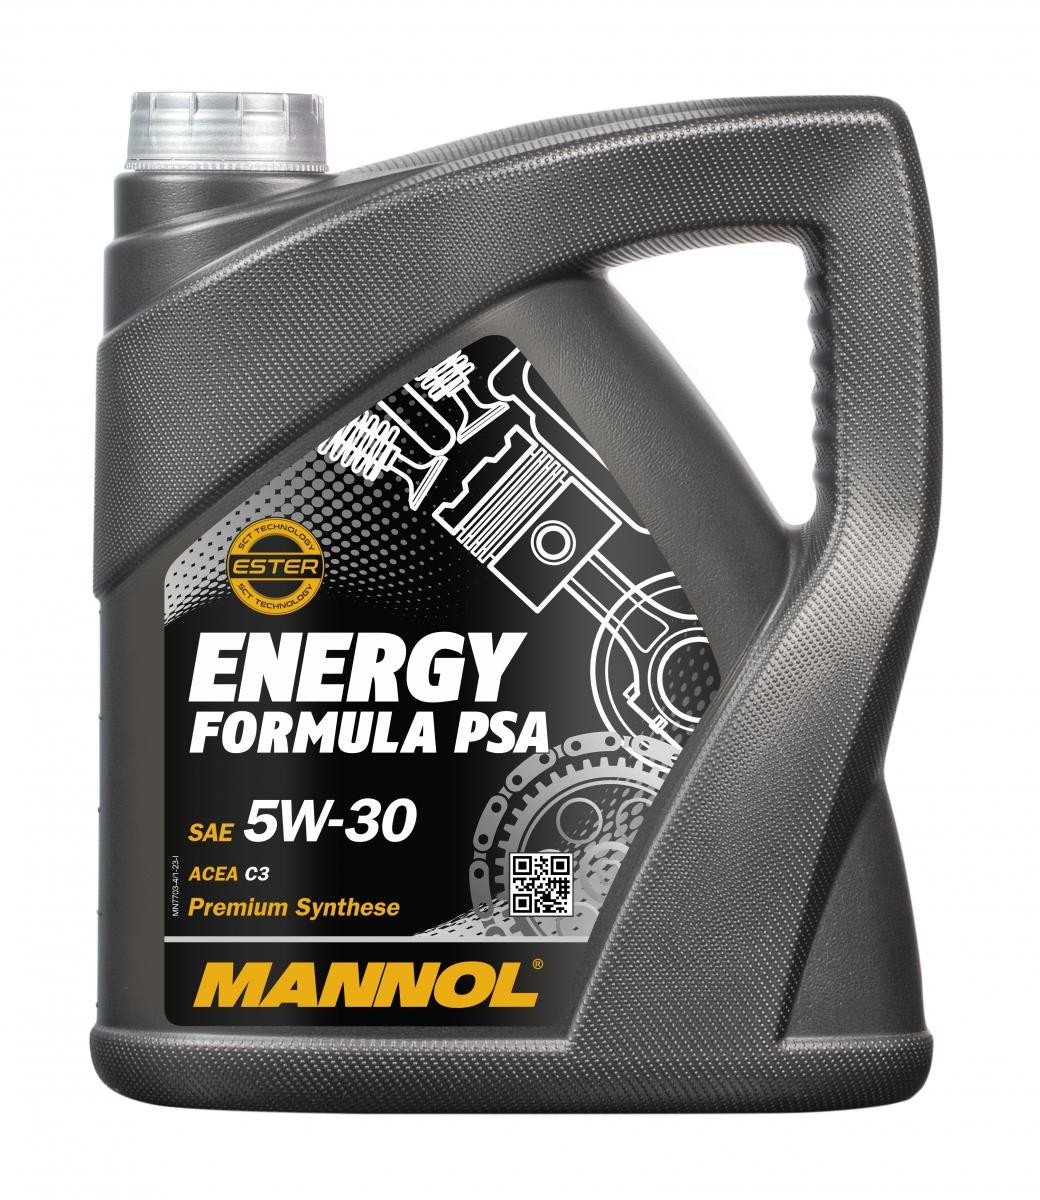 MANNOL Engineoil Energy Formula PD 5W40 2 X 5 liters buy online b, 54,95 €